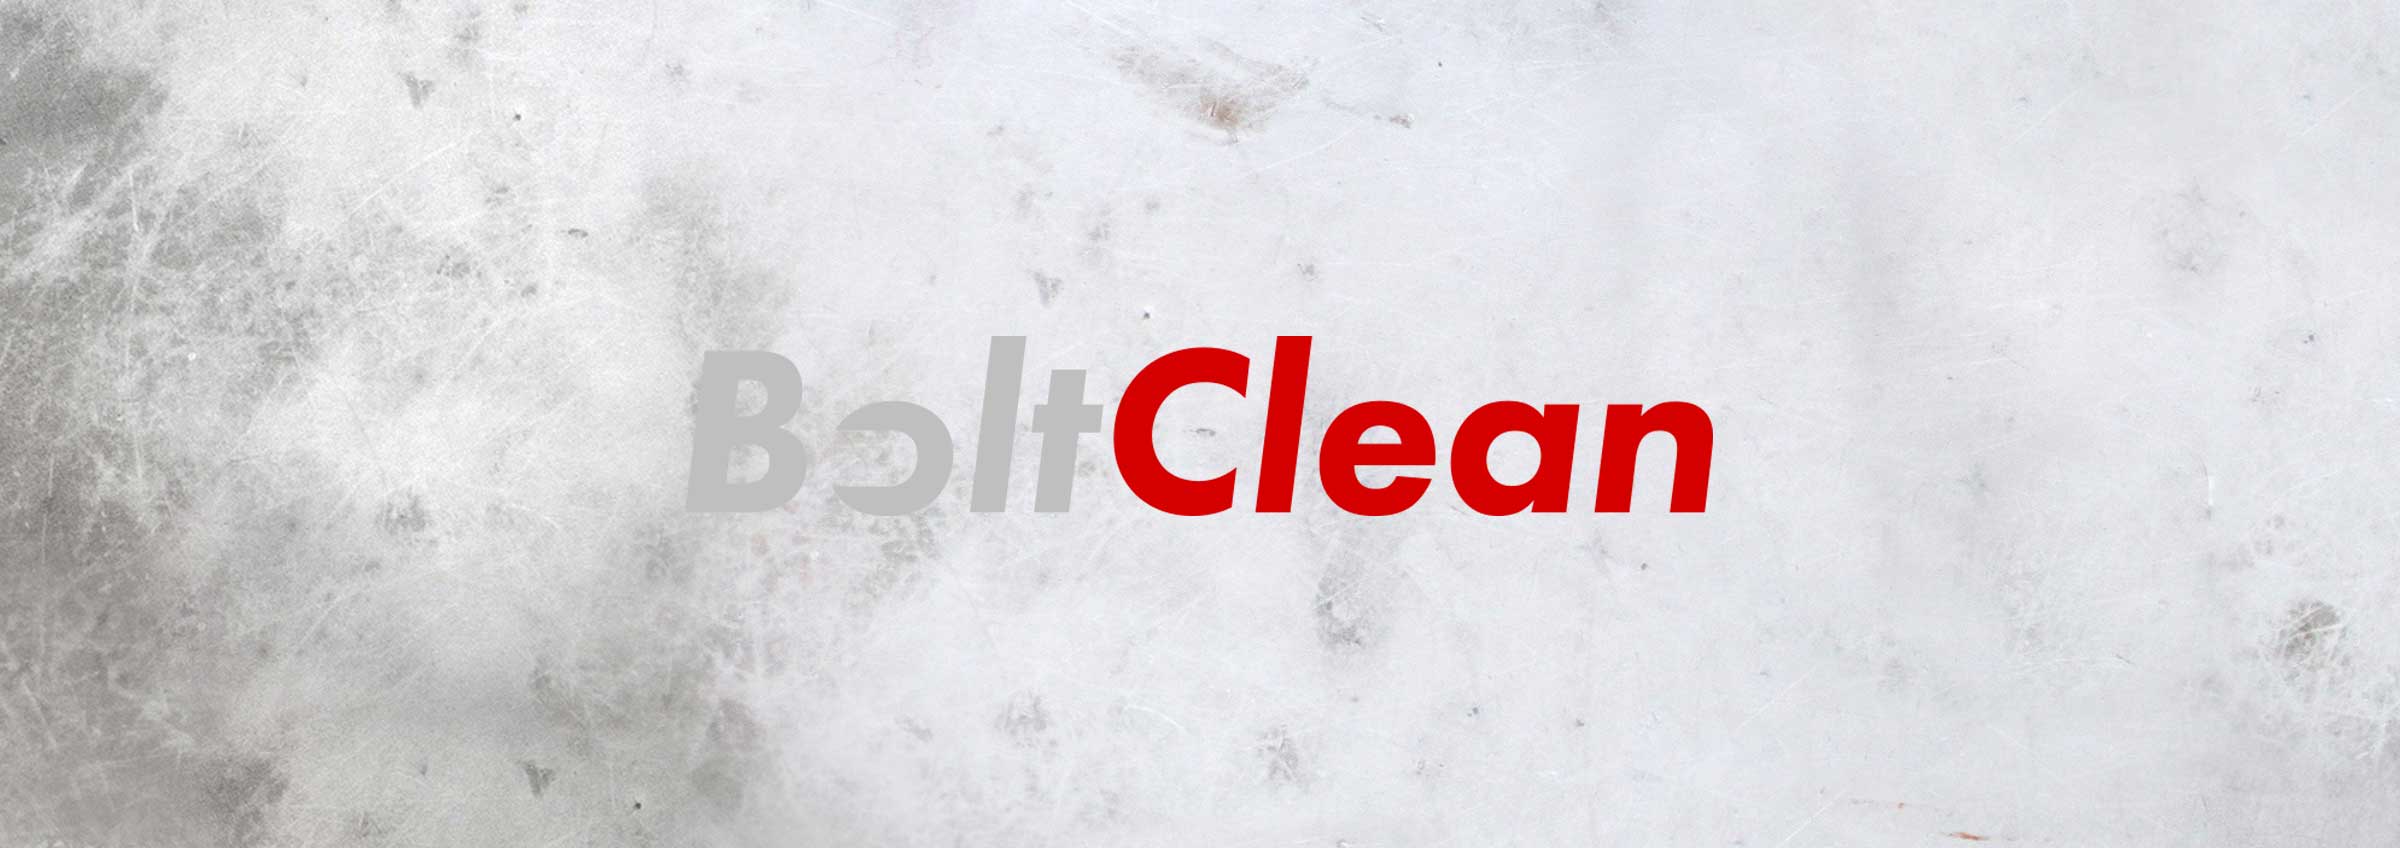 BoltClean header logolla